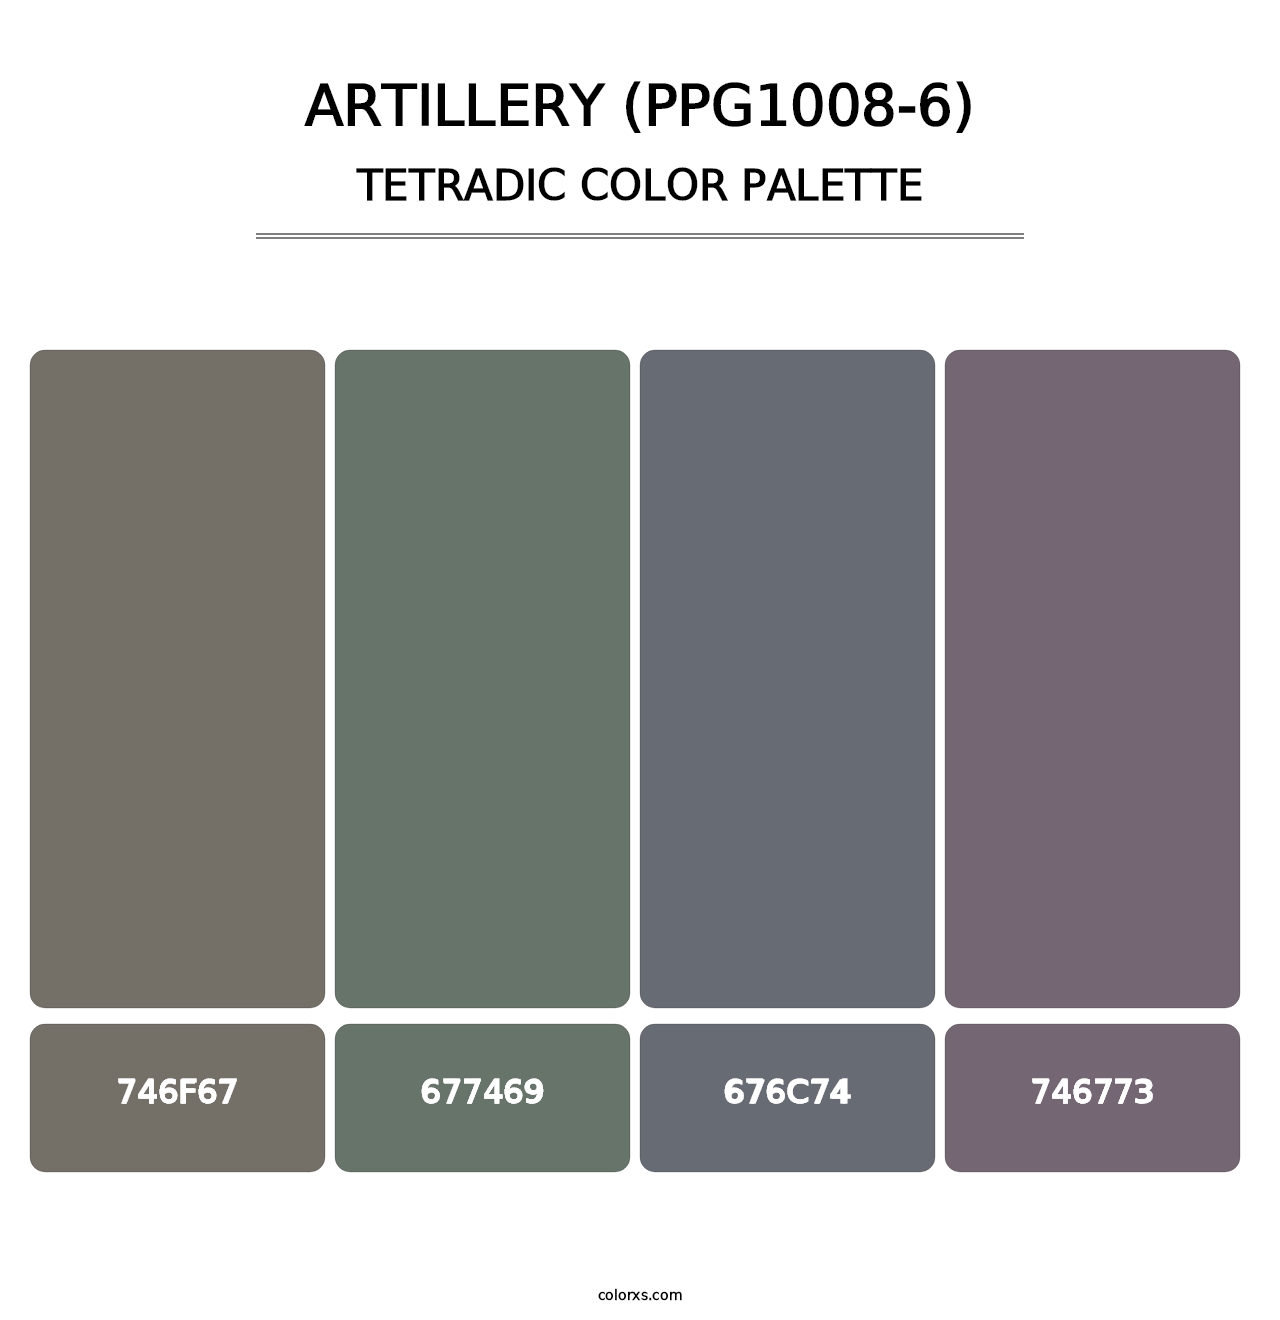 Artillery (PPG1008-6) - Tetradic Color Palette